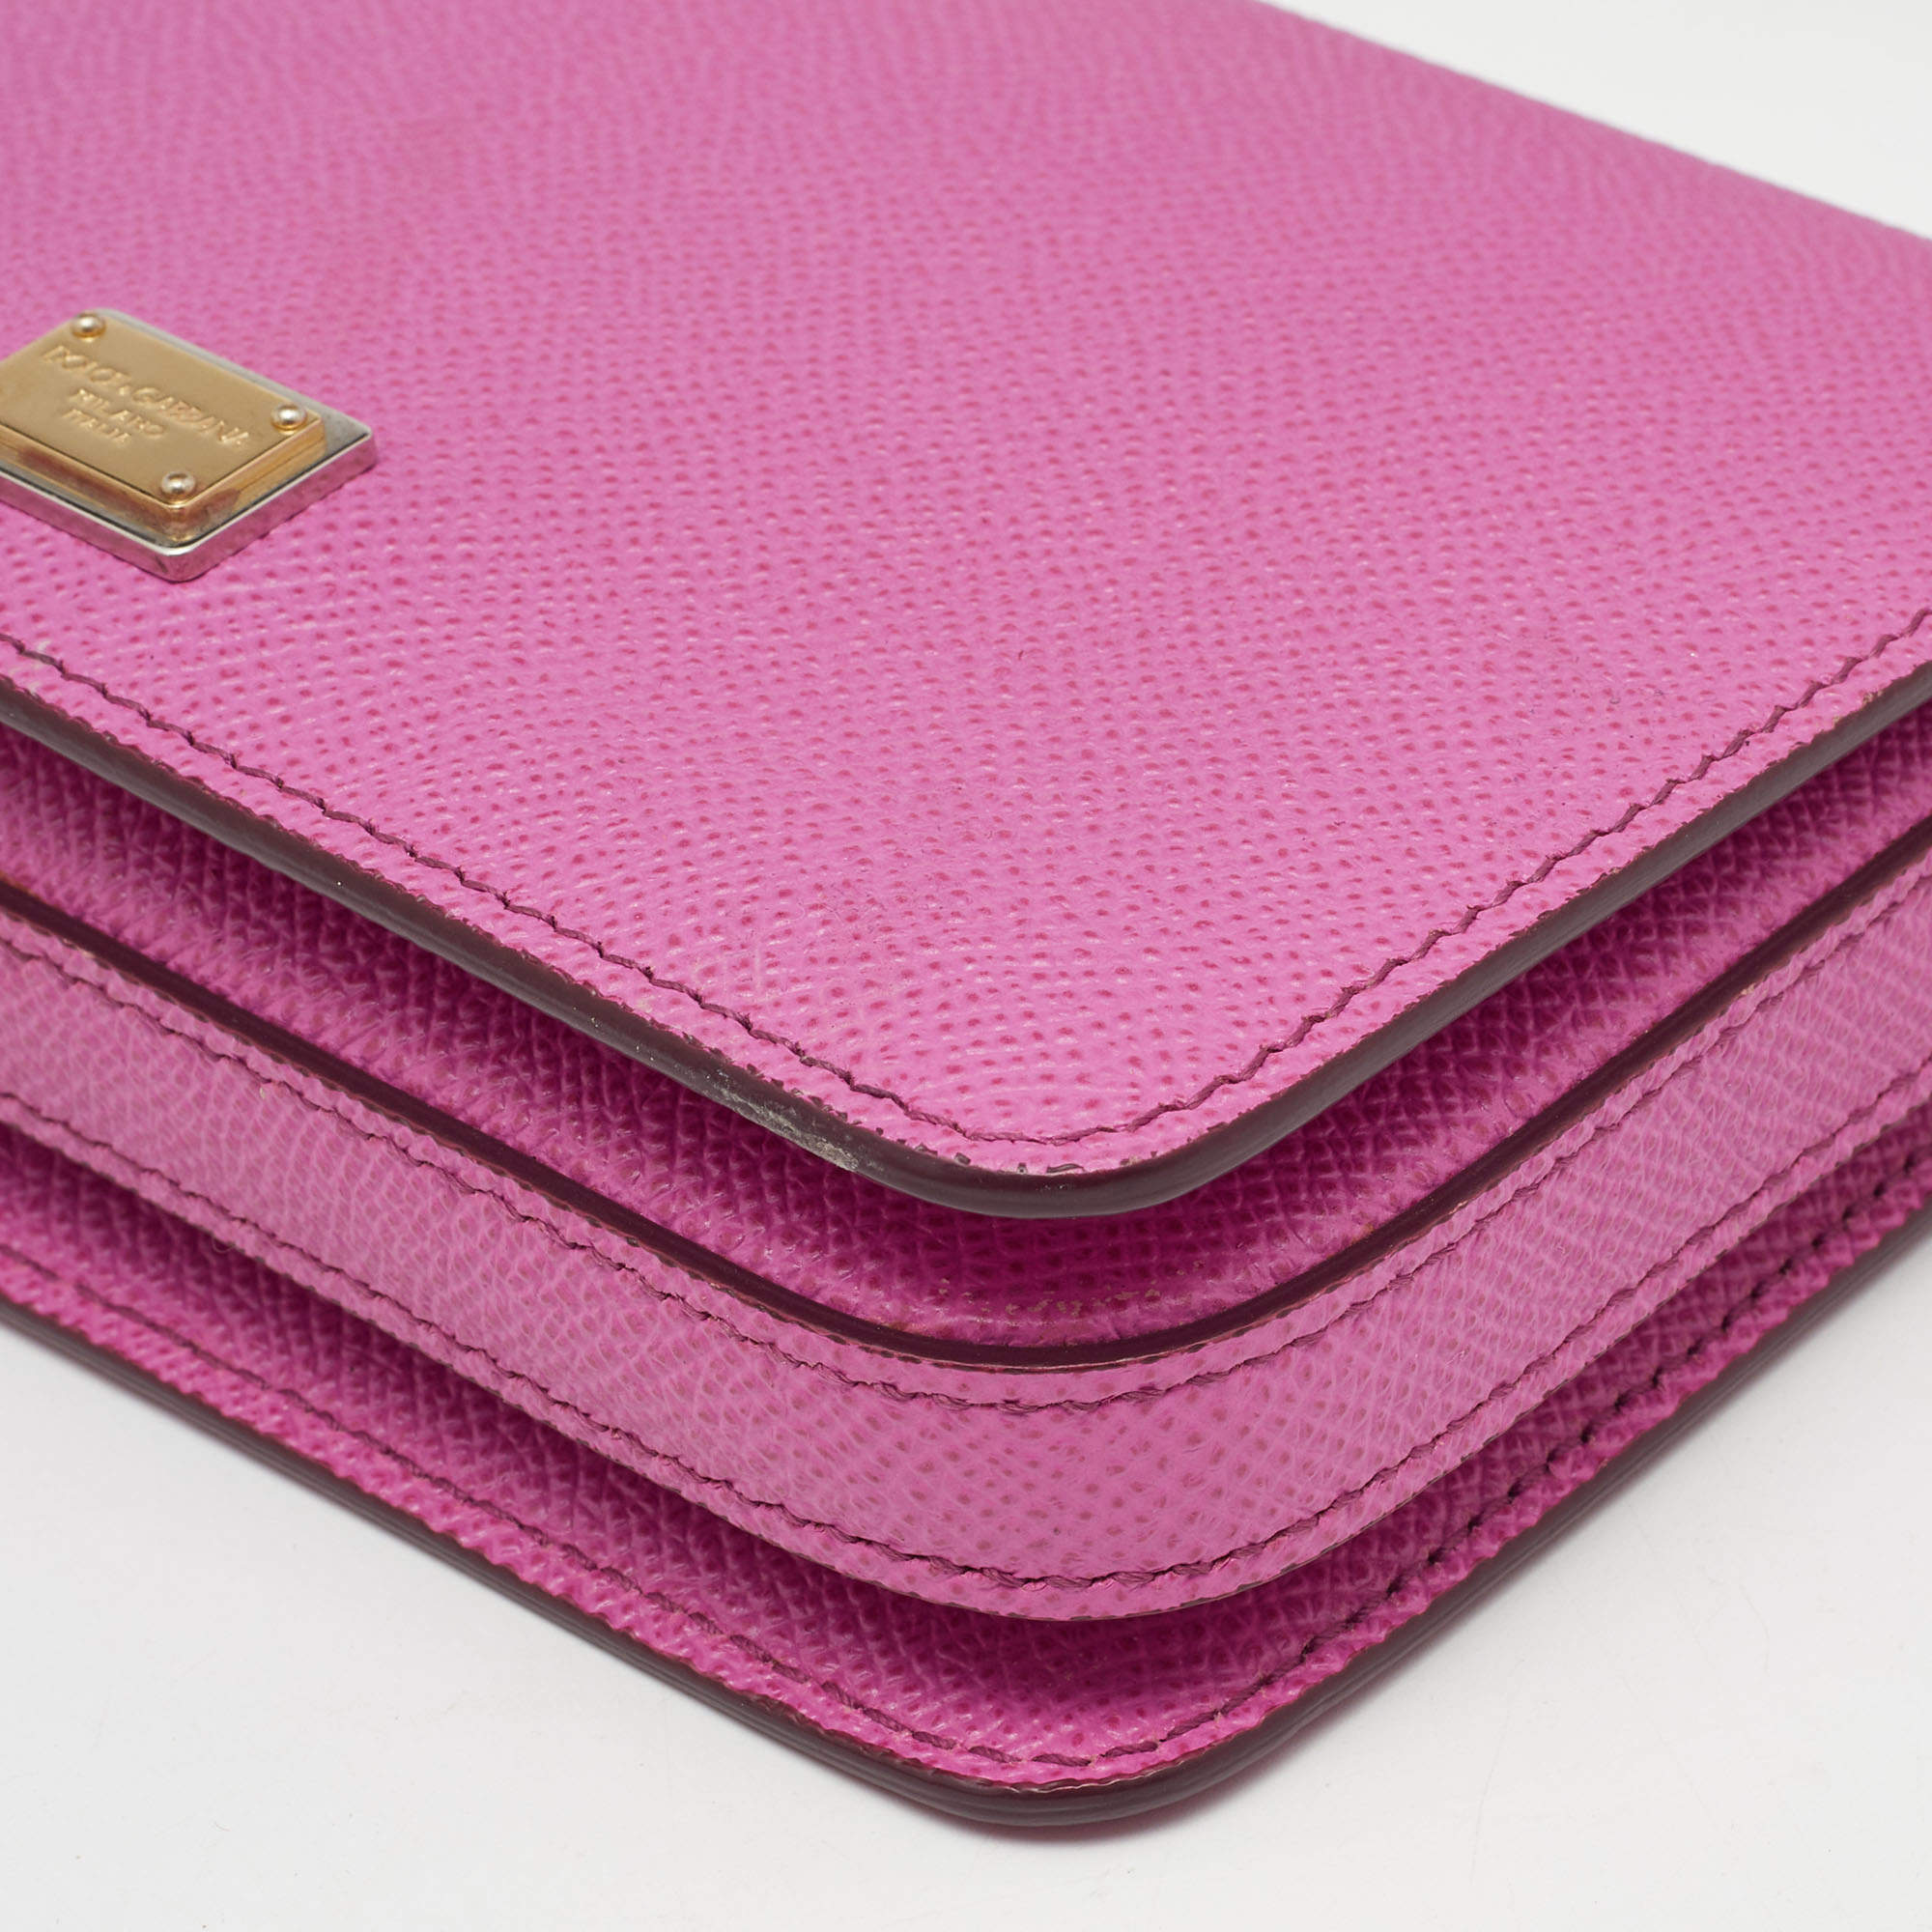 Dolce & Gabbana Pink Leather Mini Dauphine Crossbody Bag